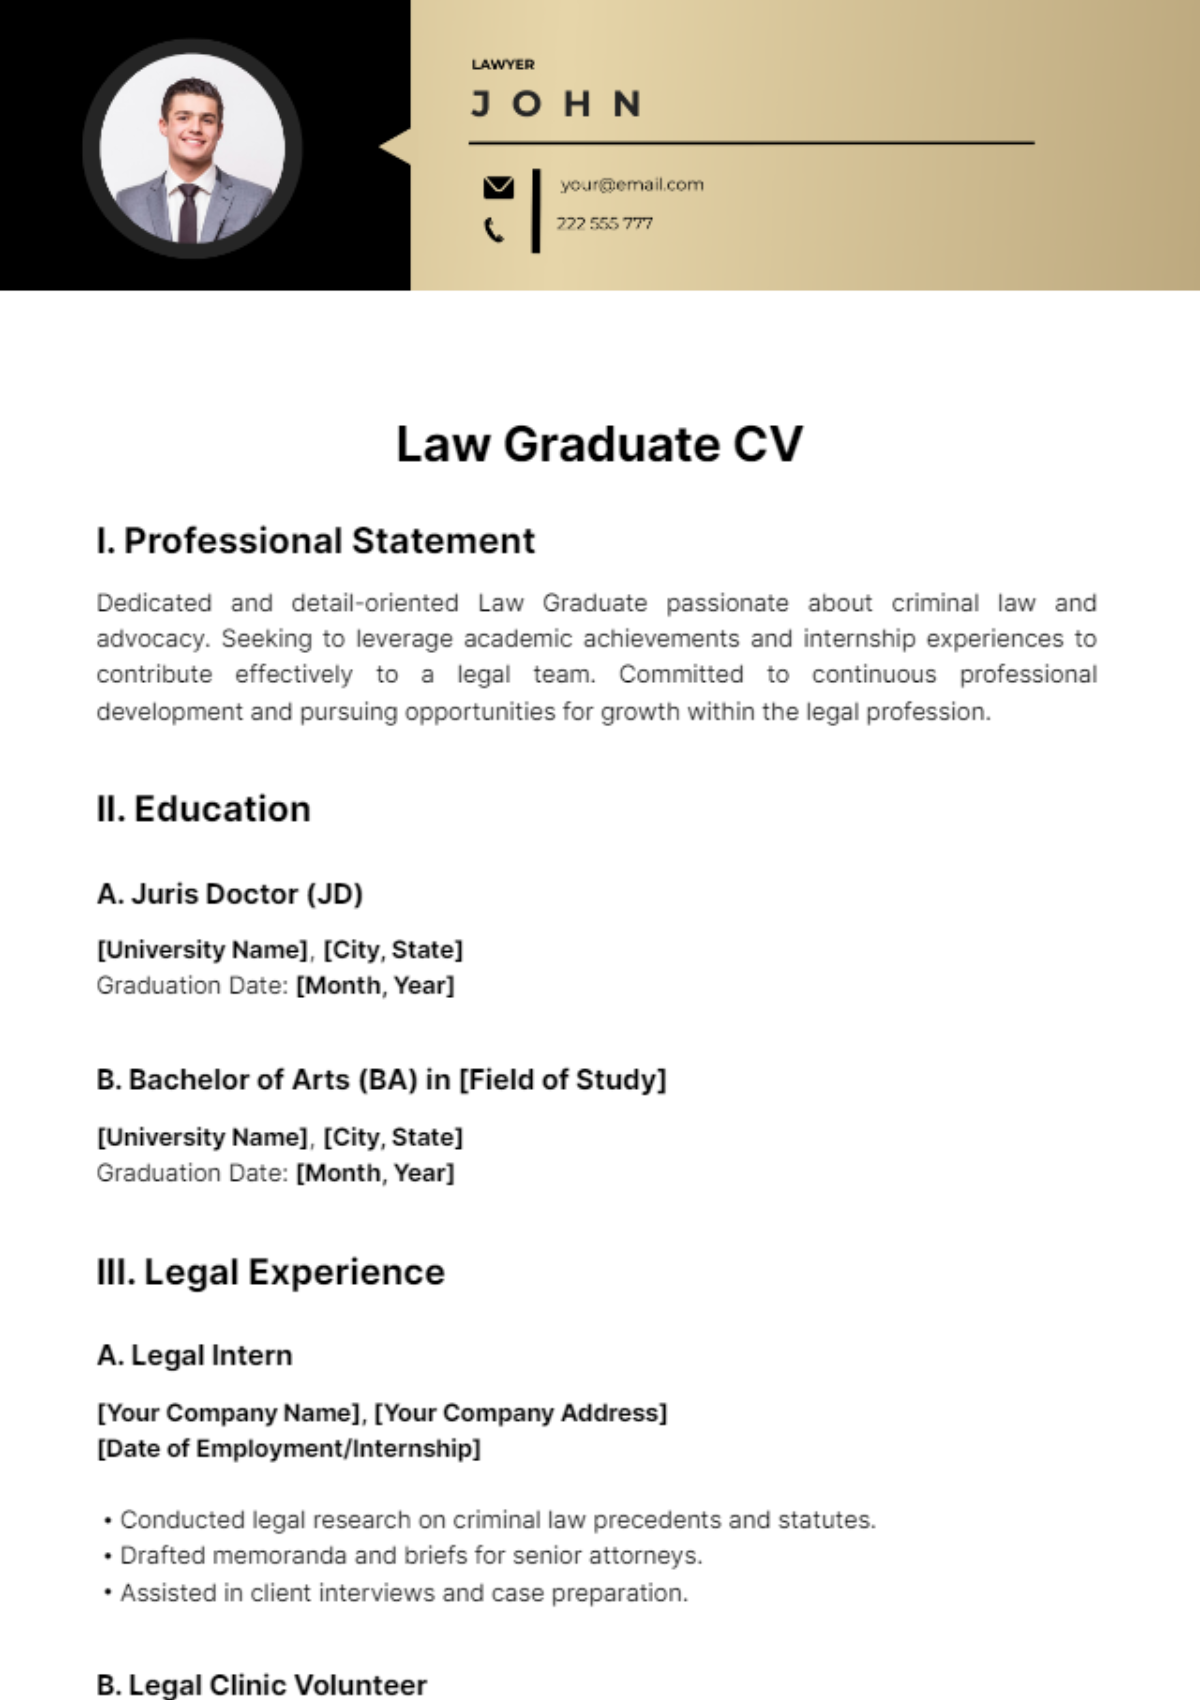 Law Graduate CV Template